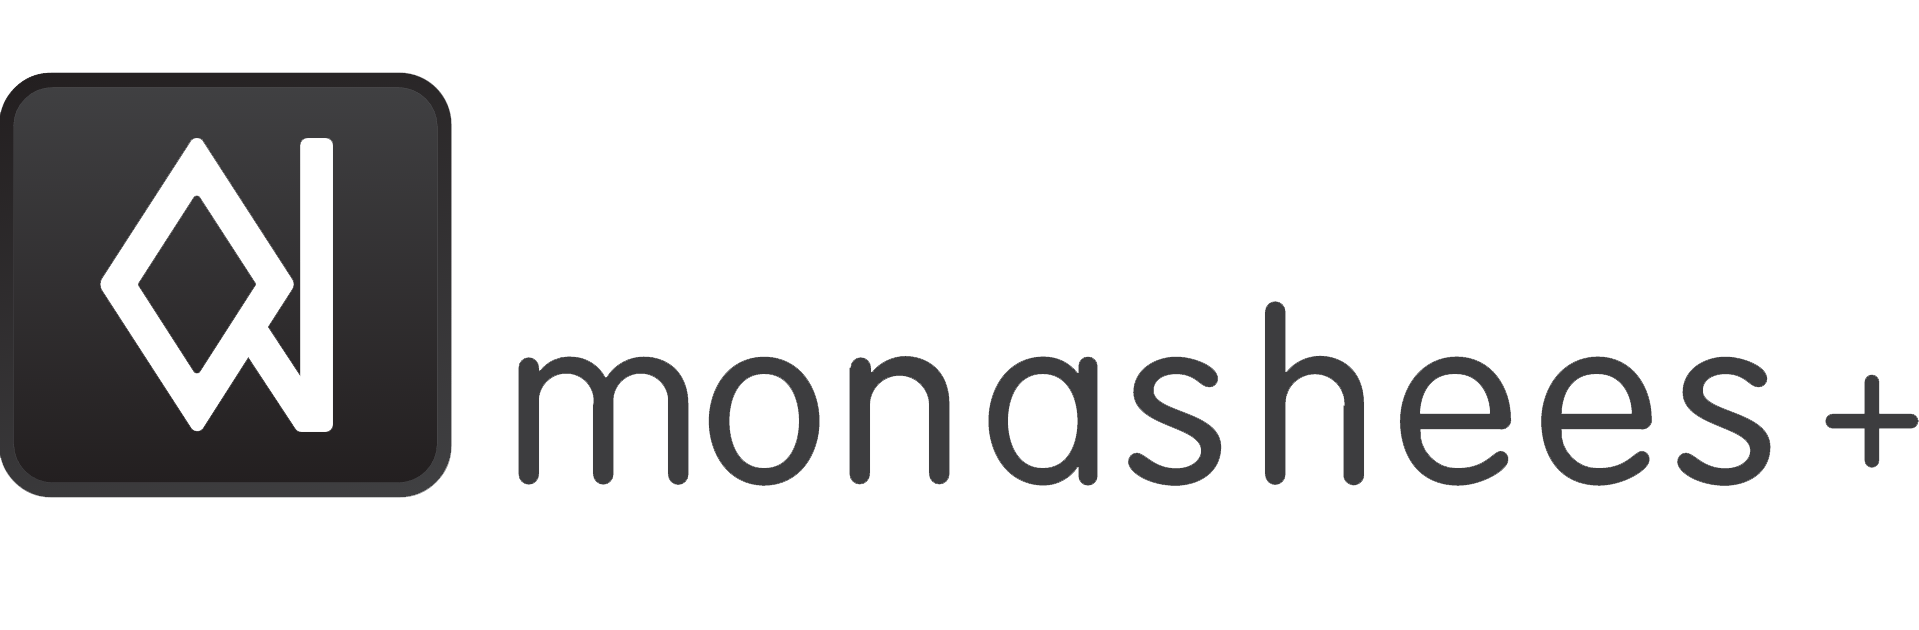 Monashees logo